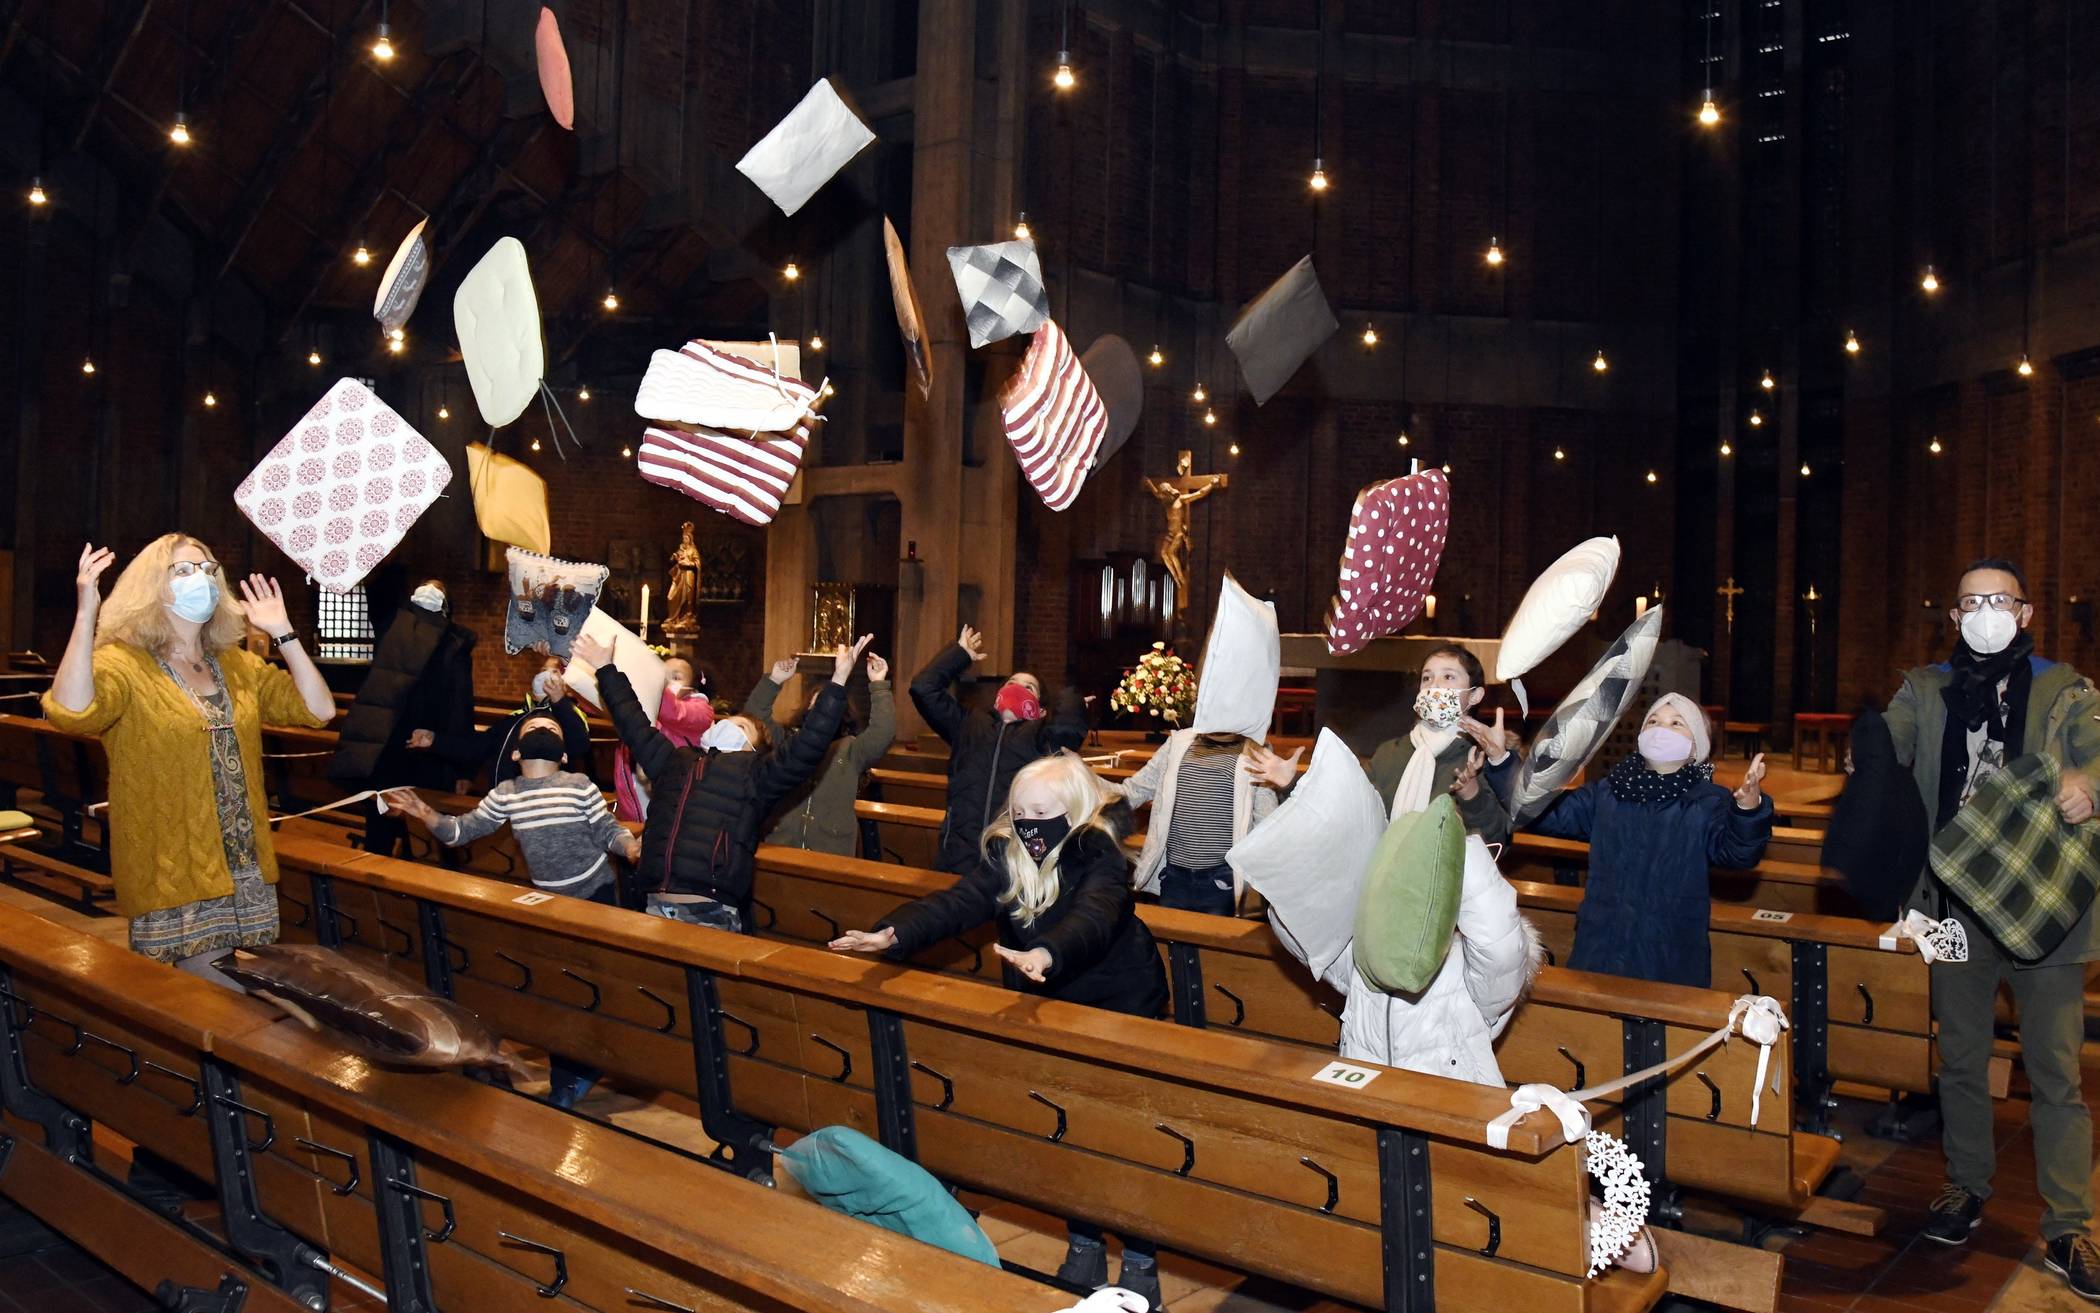 Jede Menge Kissen-Spenden gegen kalte Kirchenbänke